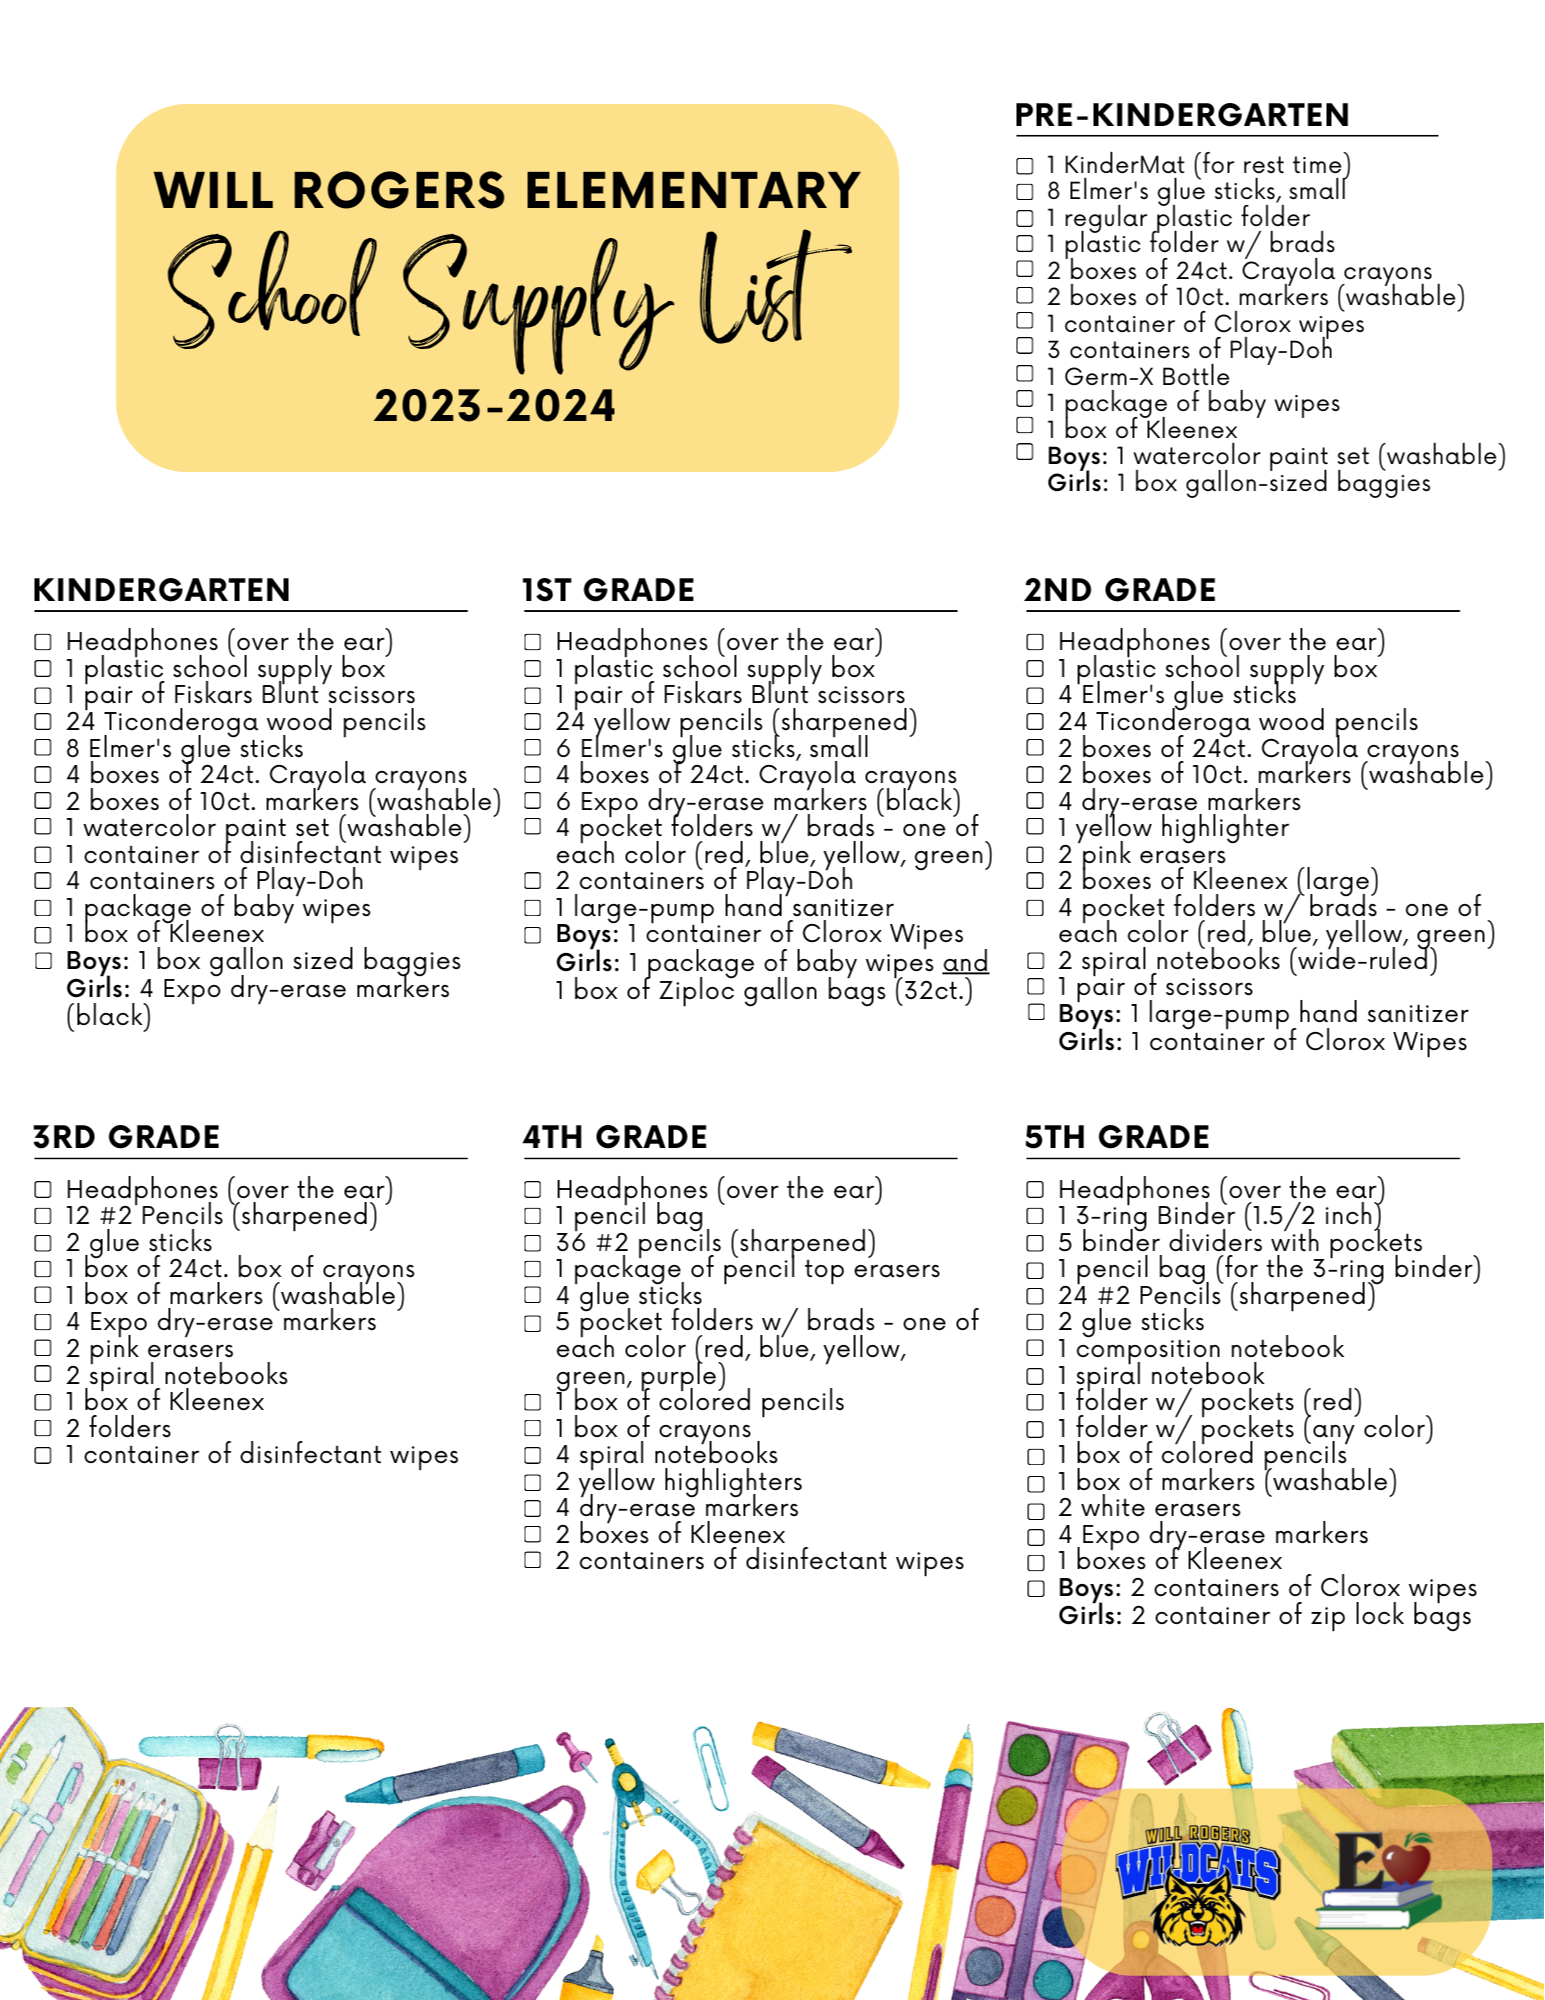 23-24 School Supply List - Sealston Elementary School